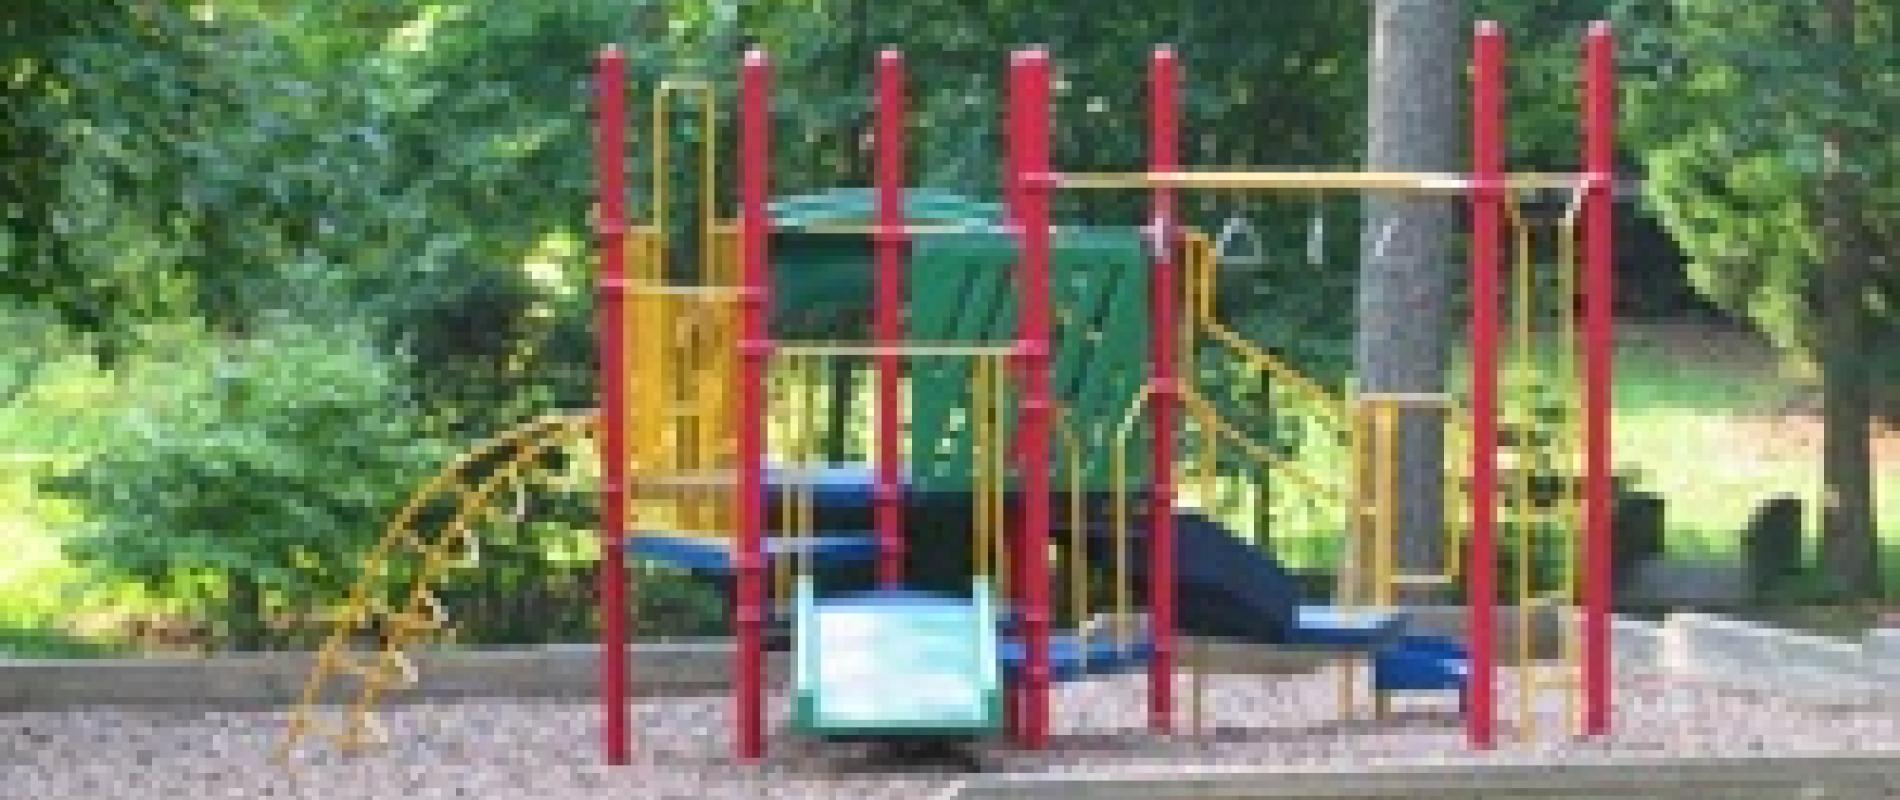 Plummer Park Playground